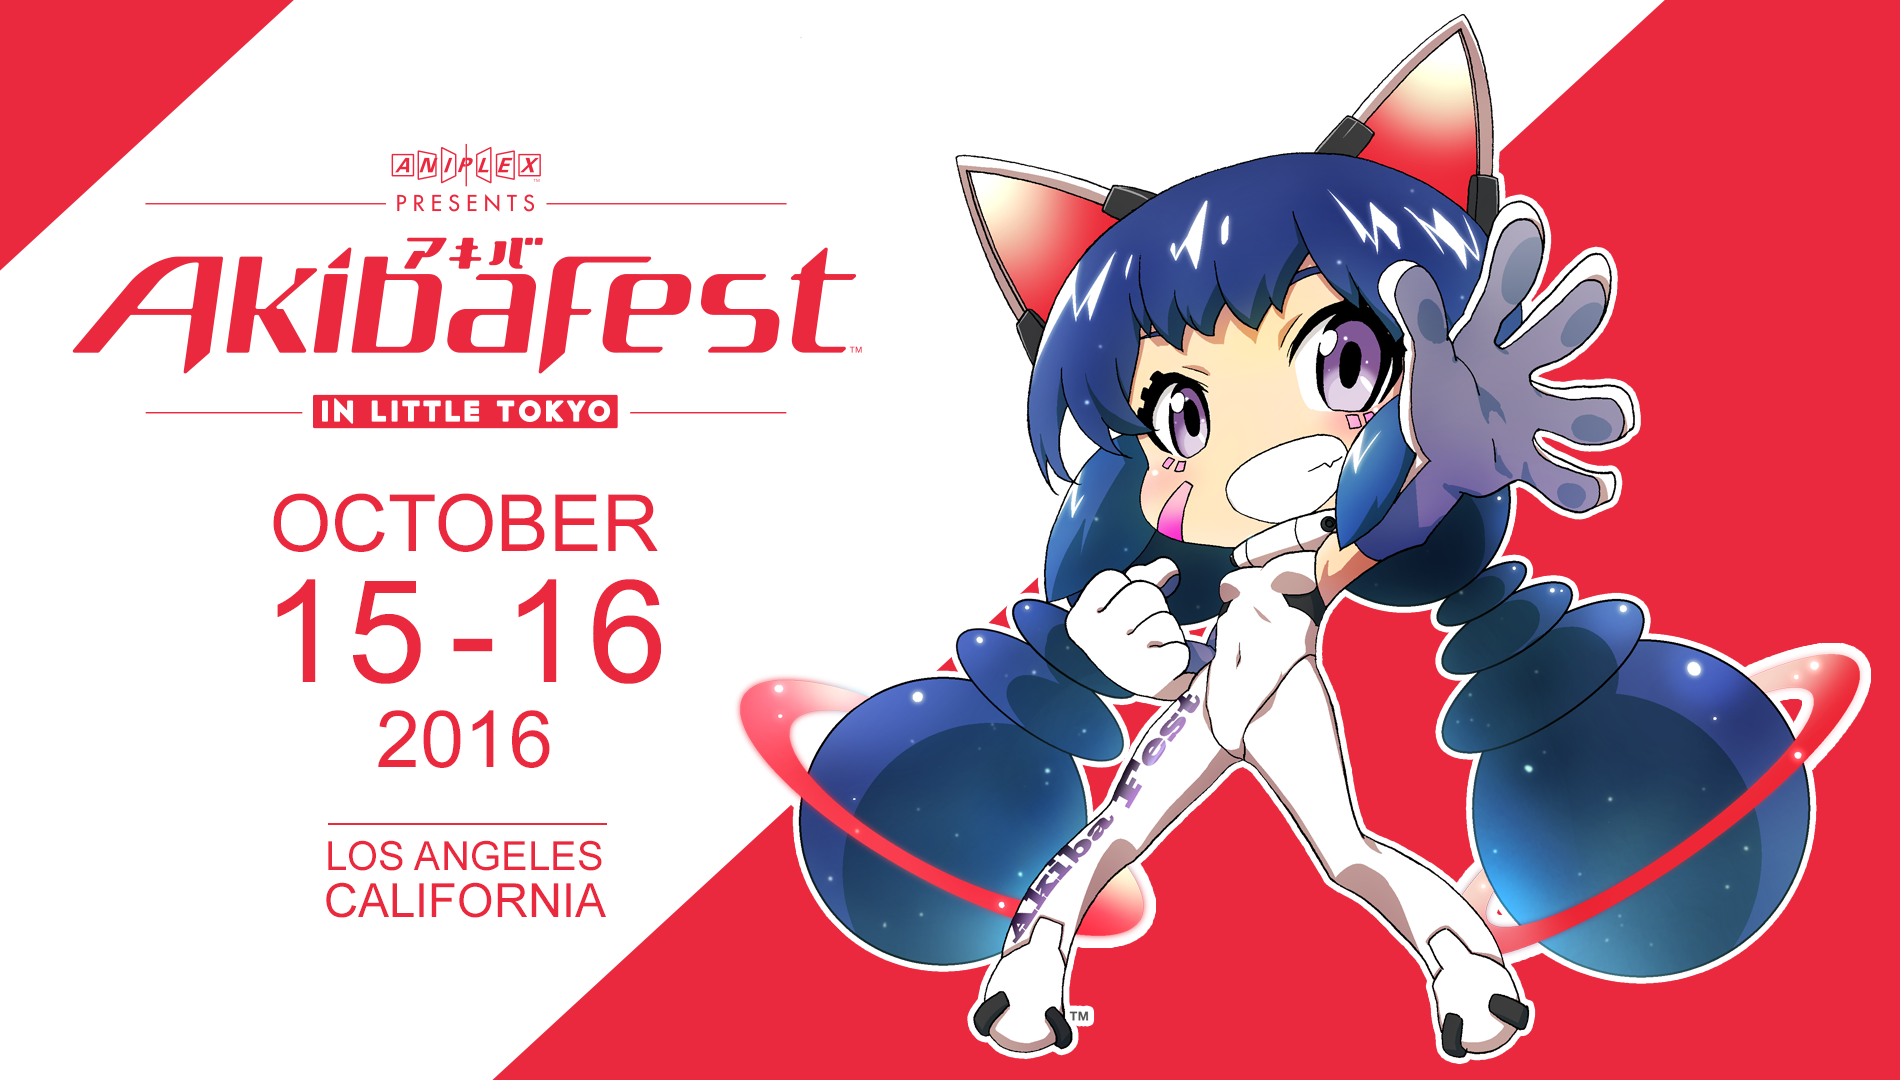 NekoPOP-AkibaFest-2016-announce-1